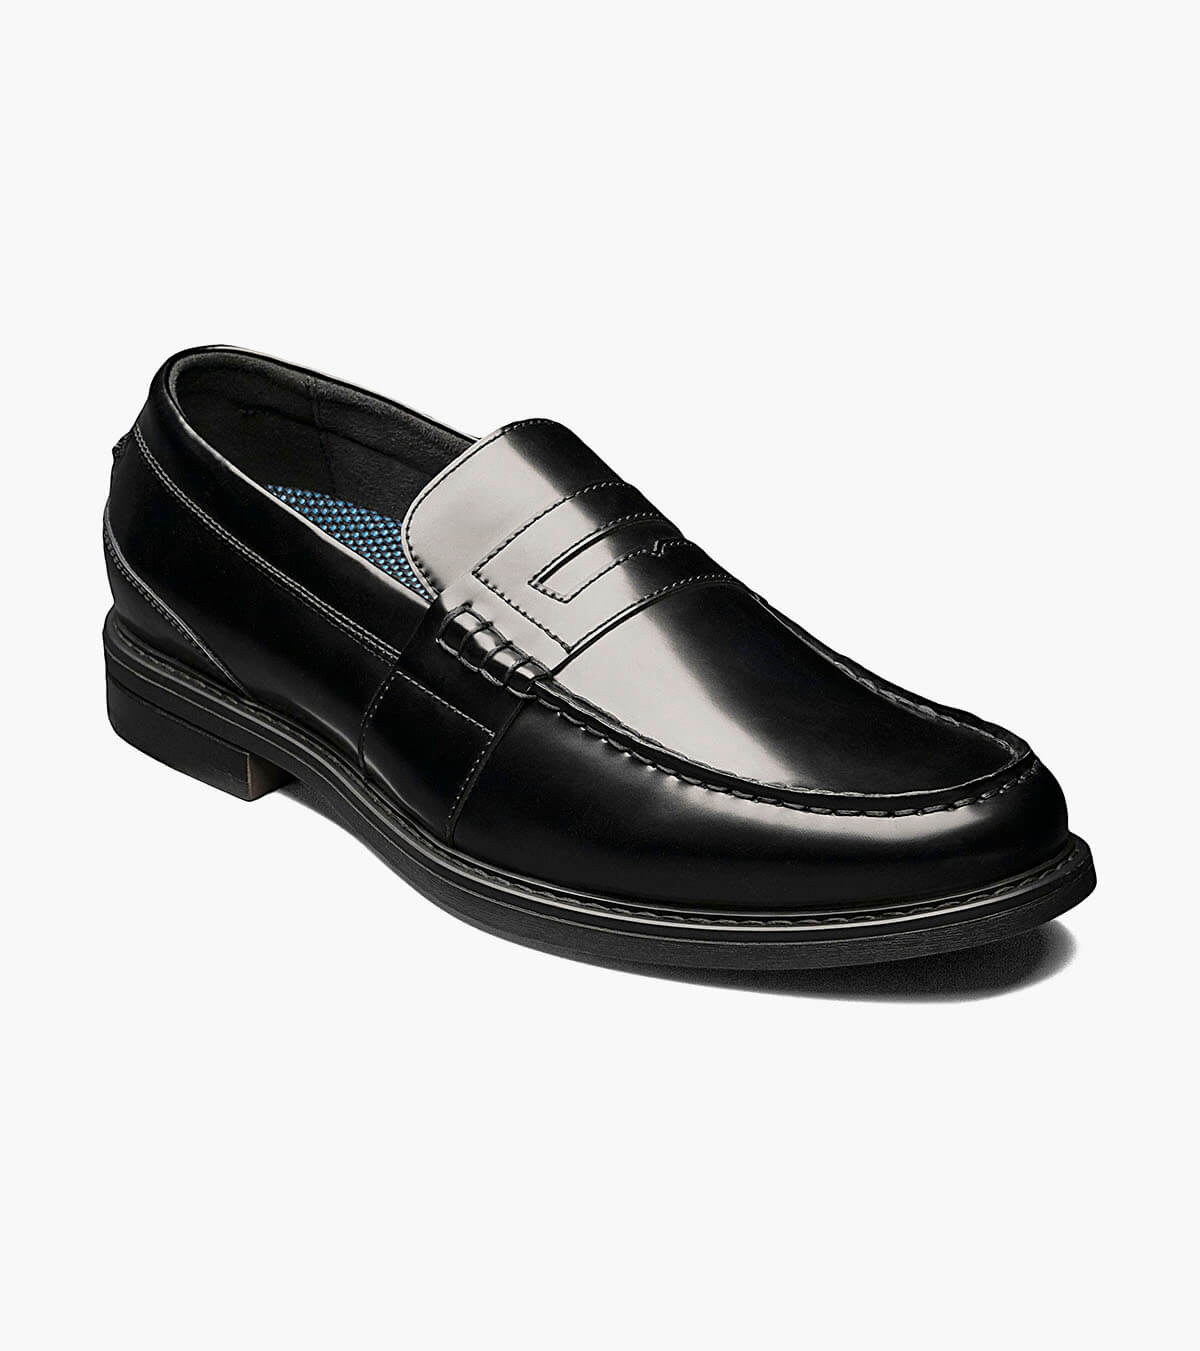 Nunn Bush Shoes Lincoln Moc Toe Penny Loafer Black Multi Size 9